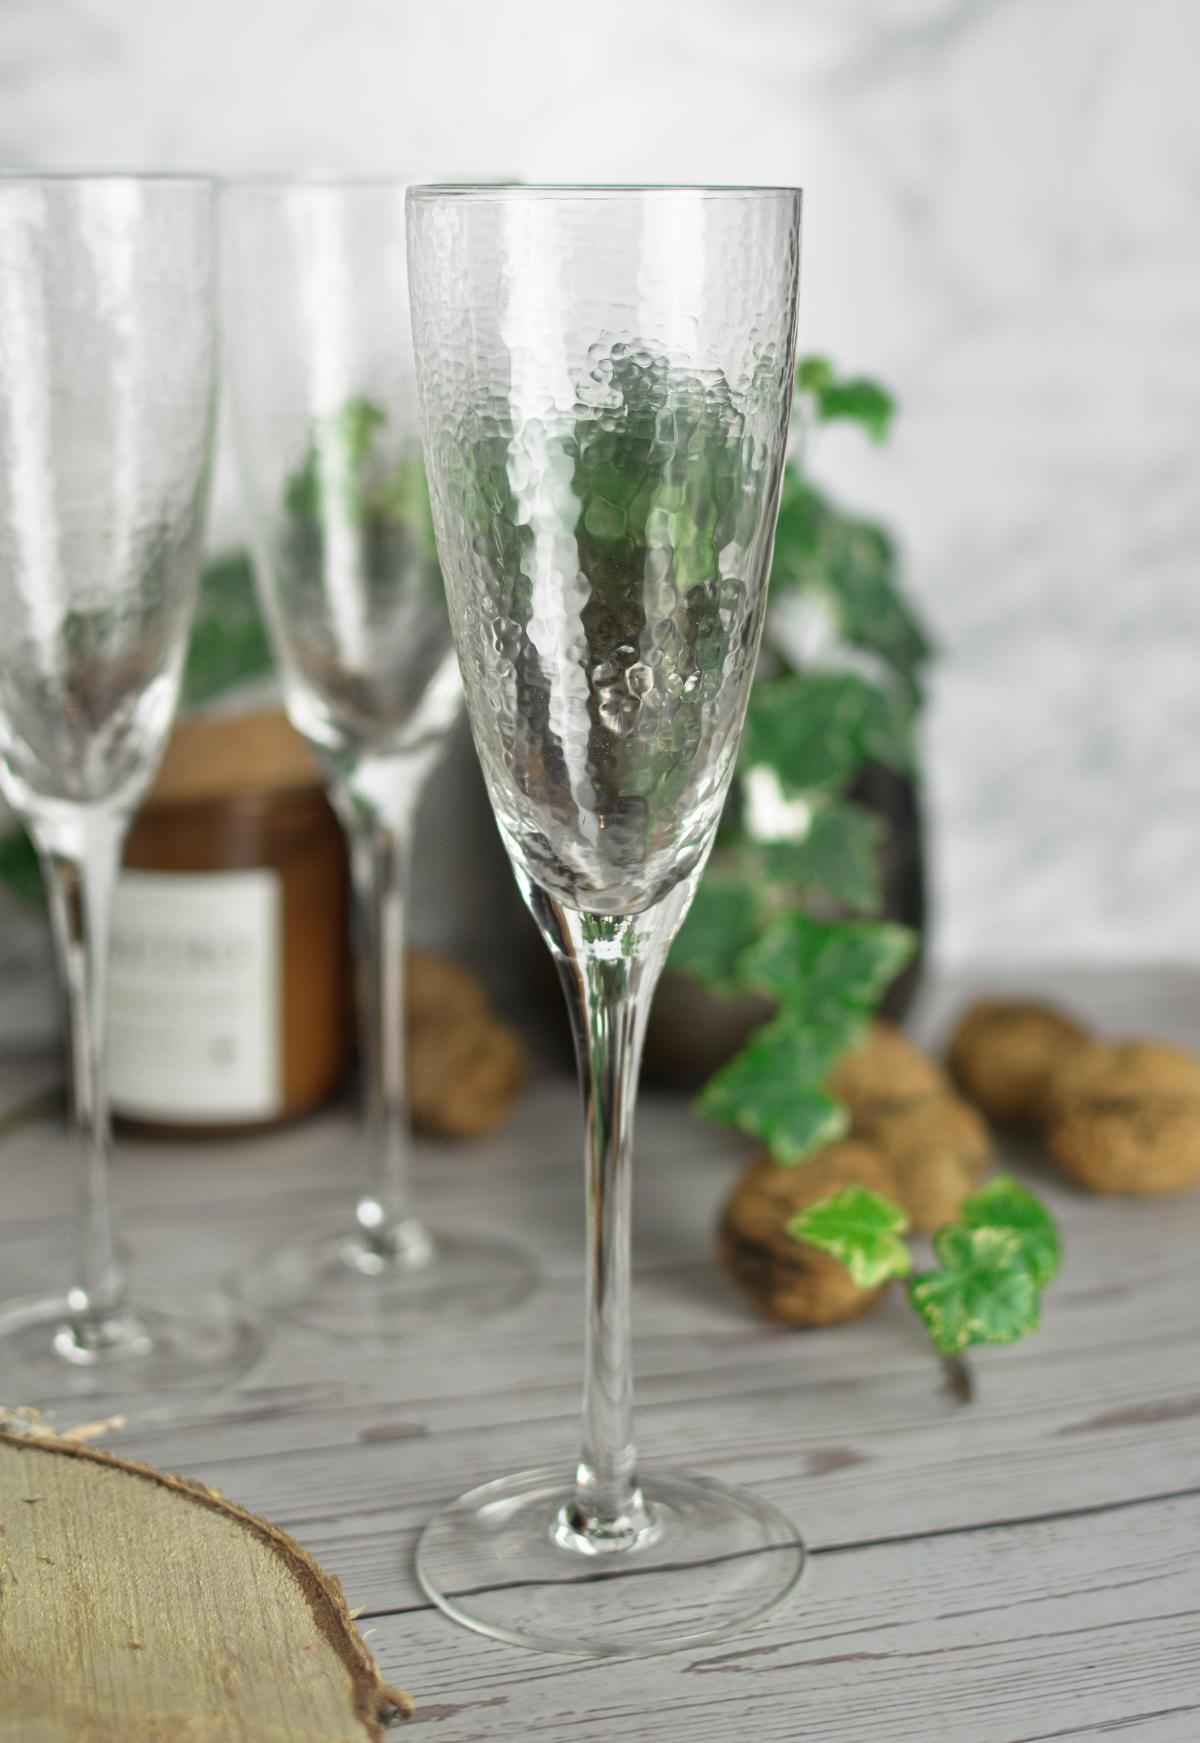 Sendez handmade champagne glasses in a pack of 6 champagne glasses champagne glasses Prosecco